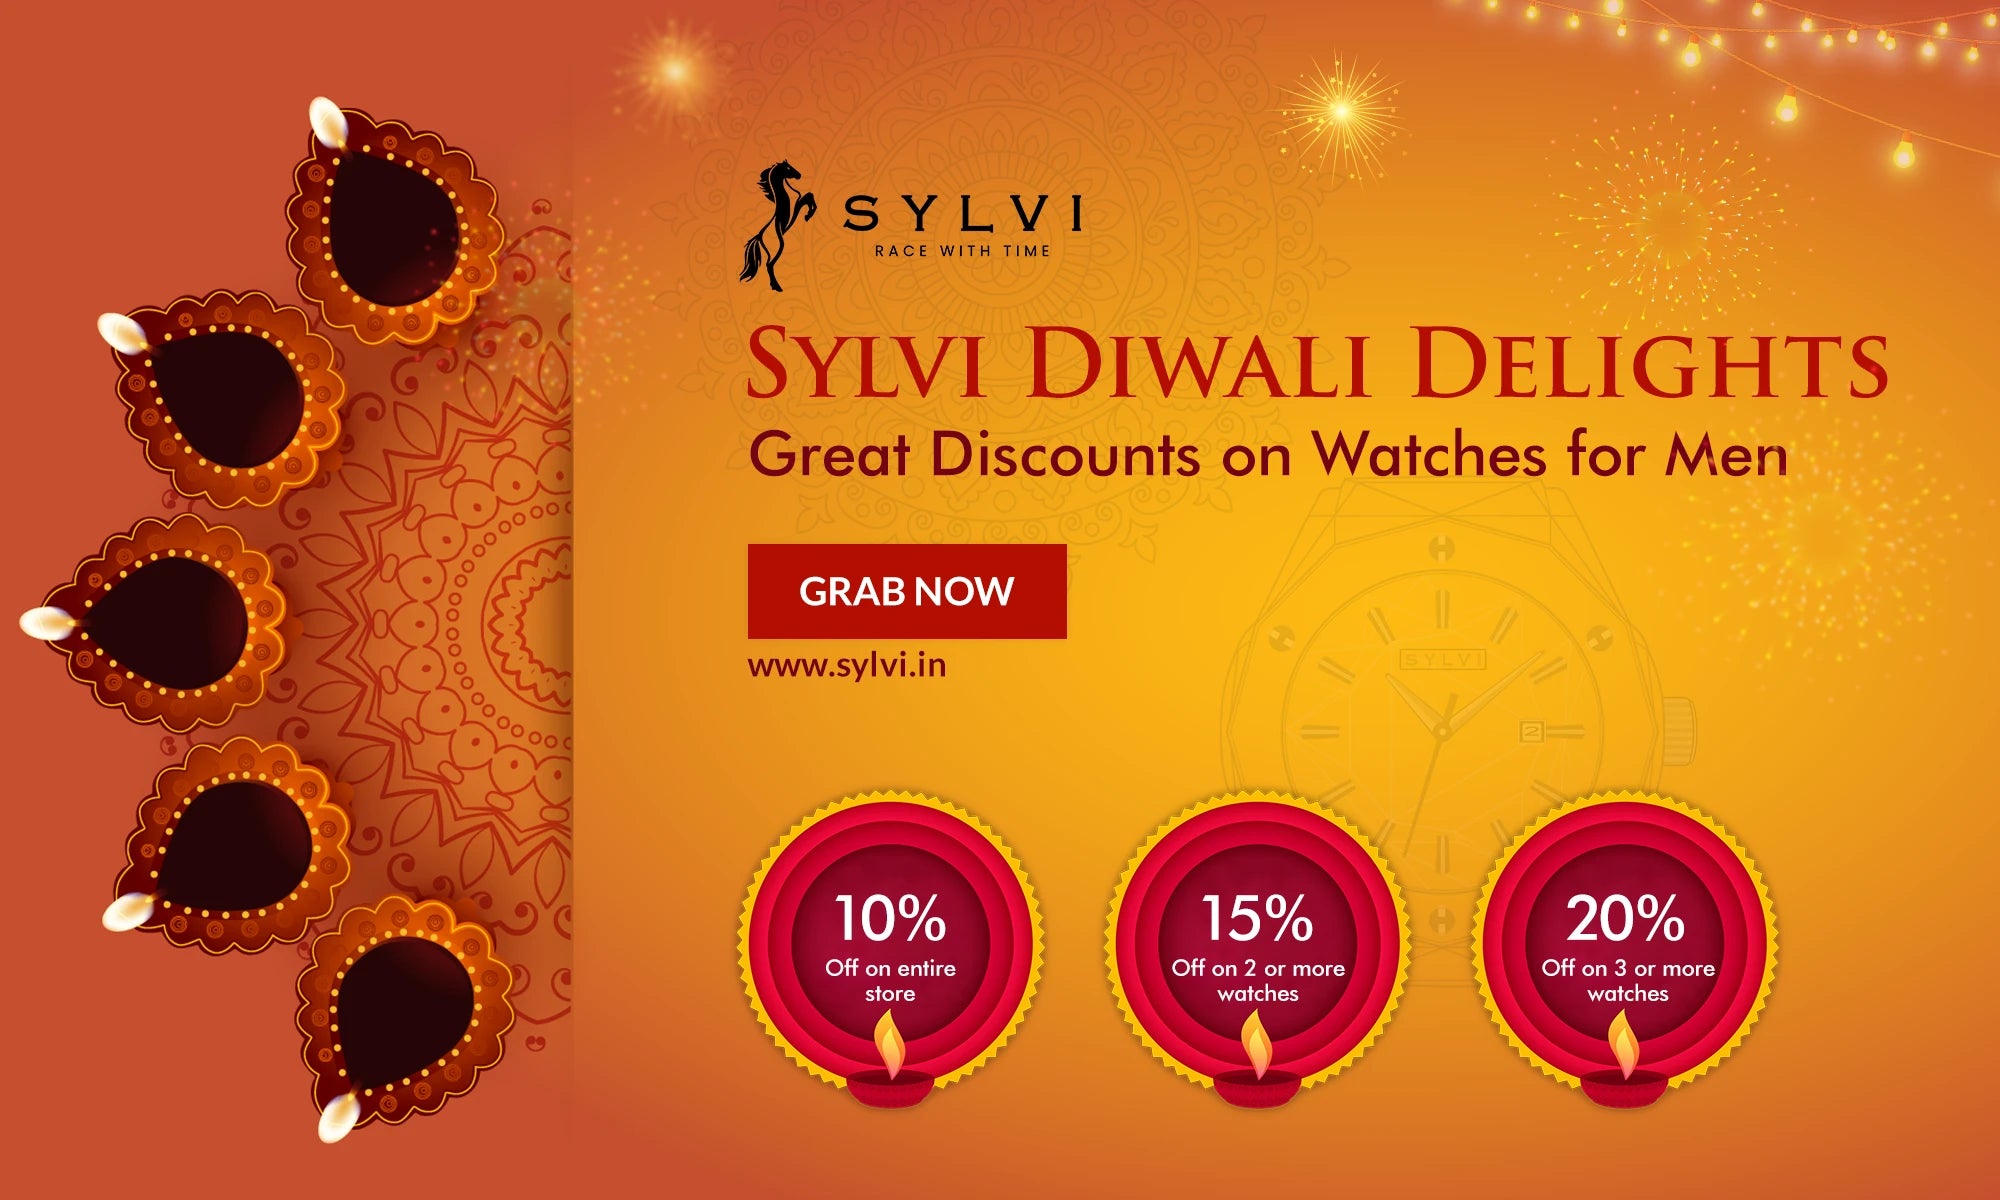 Sylvi Diwali Delights: Diwali Mega Sale Discount Offers on Premium Watches